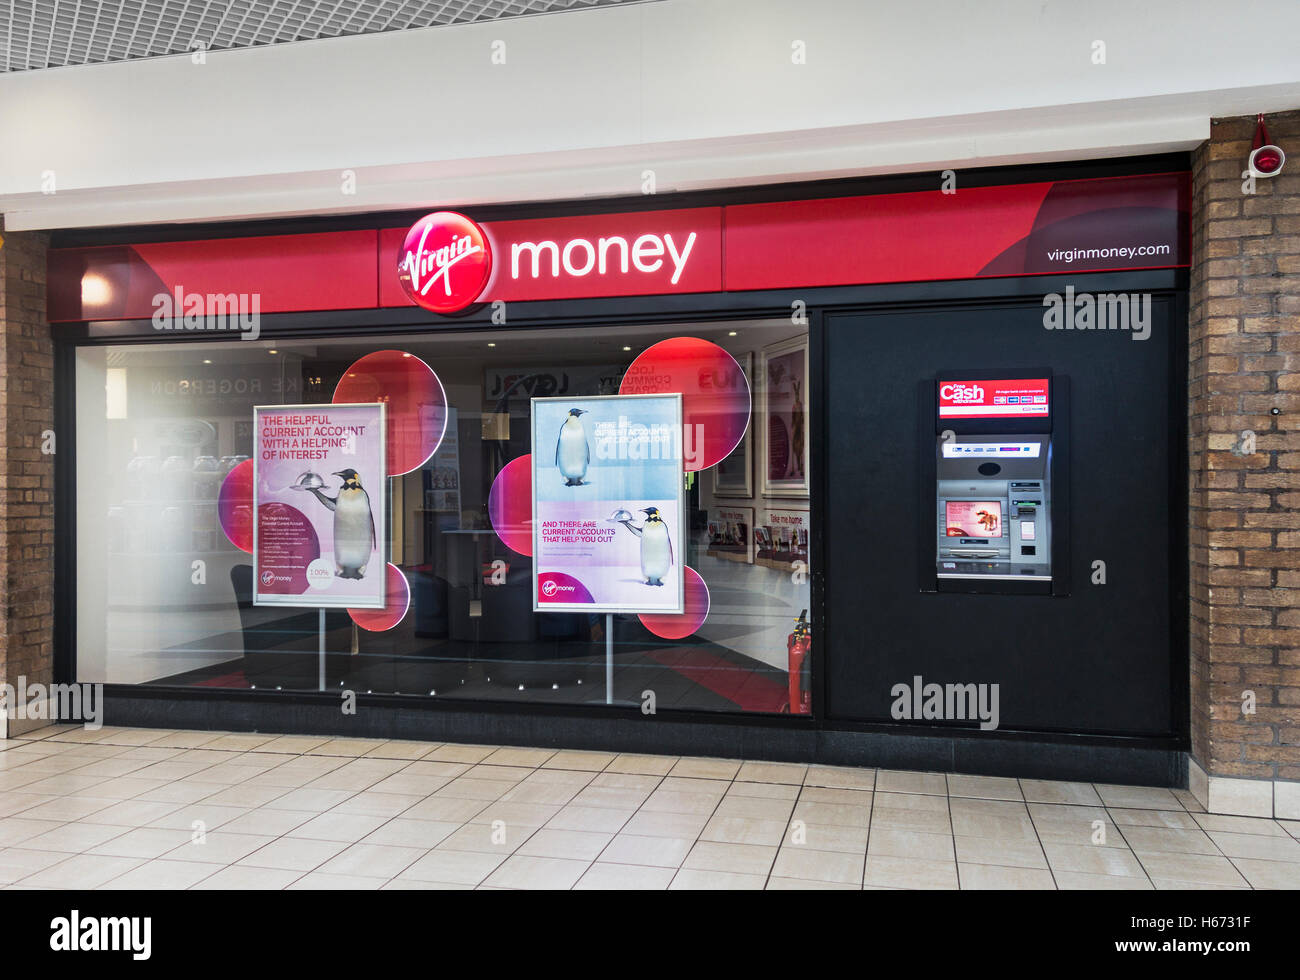 Virgin Money branch displaying logo and cash machine. Stock Photo